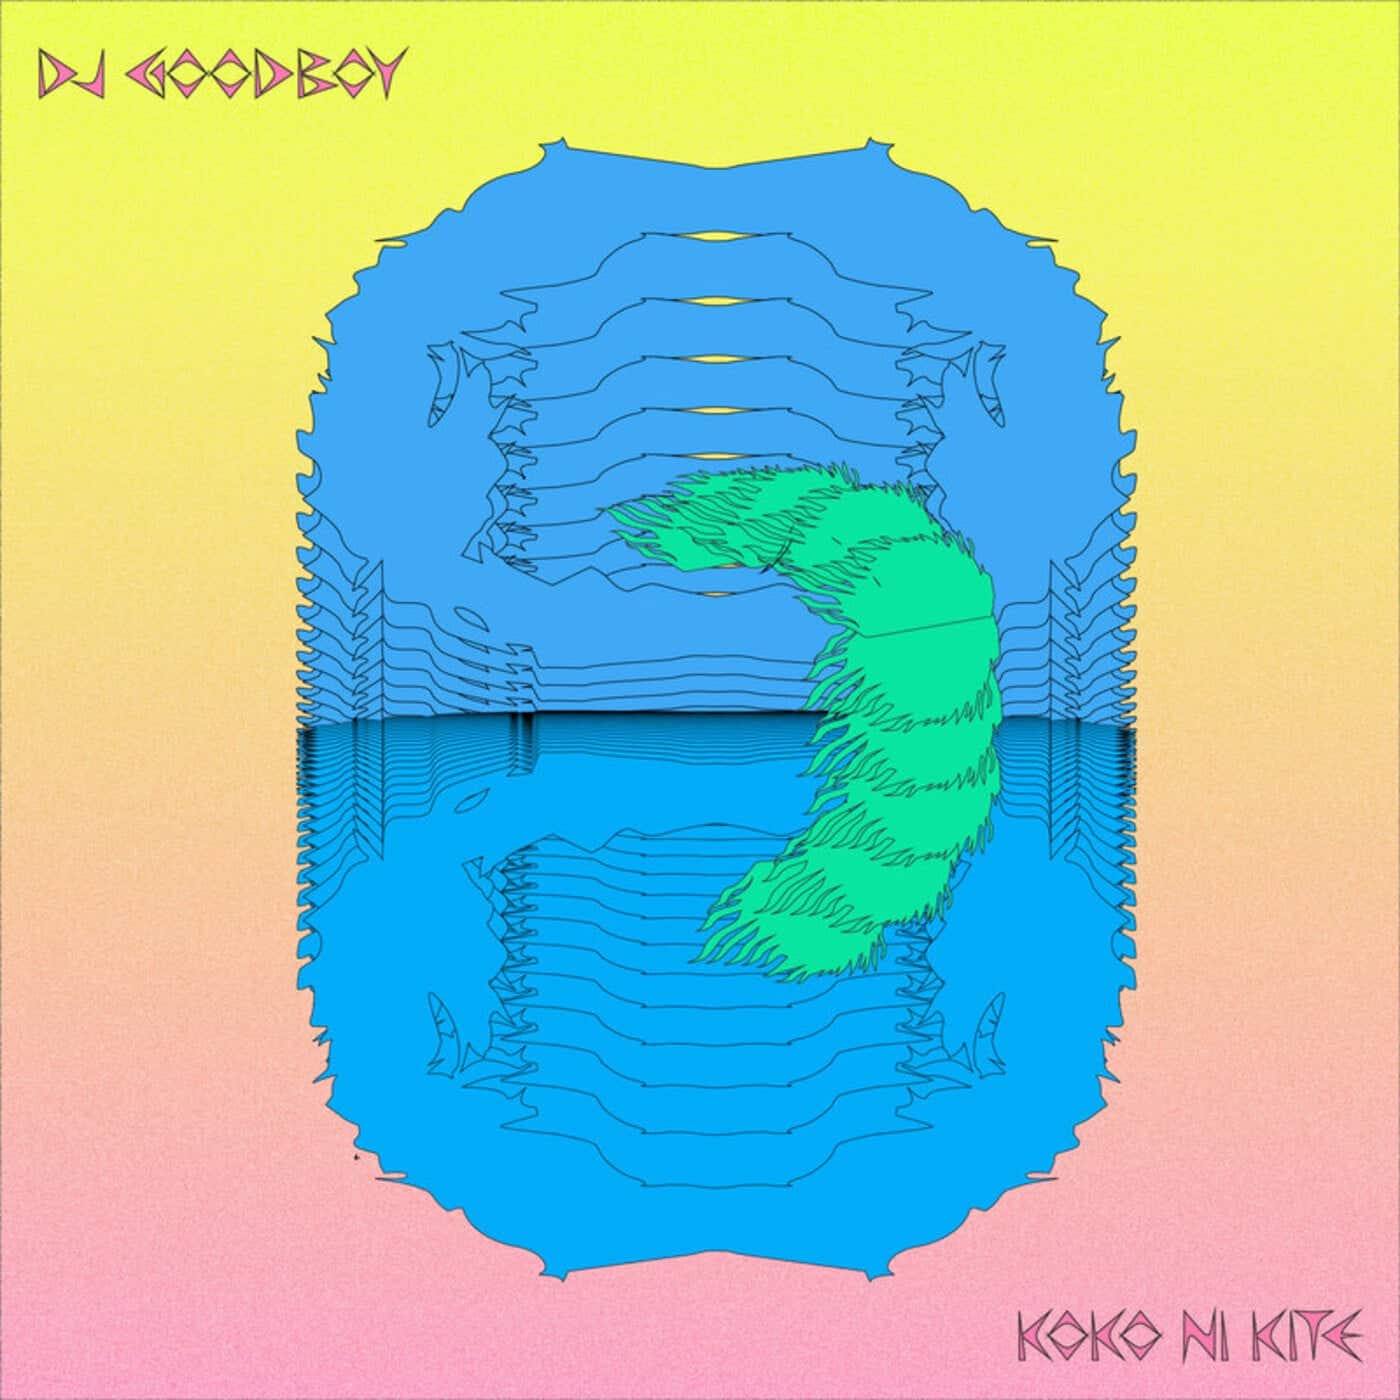 image cover: DJ Goodboy - Koko Ni Kite / CLPTRPDG005